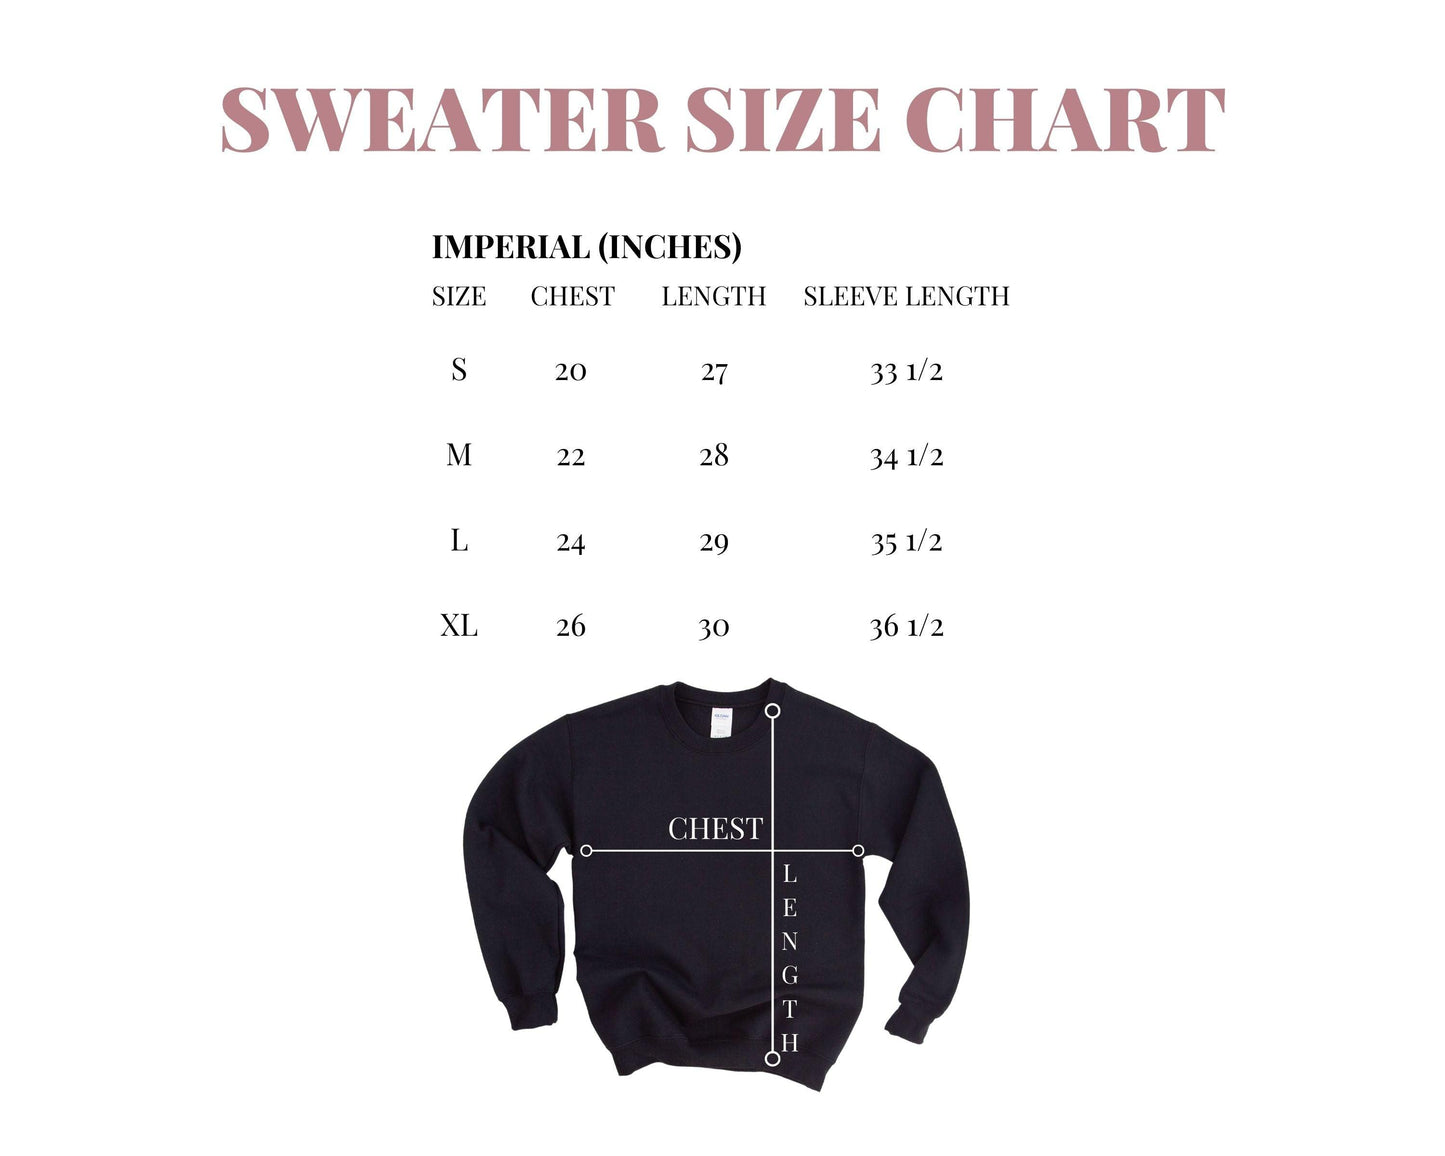 Grandma Crewneck Sweatshirt - Crystal Rose Design Co.